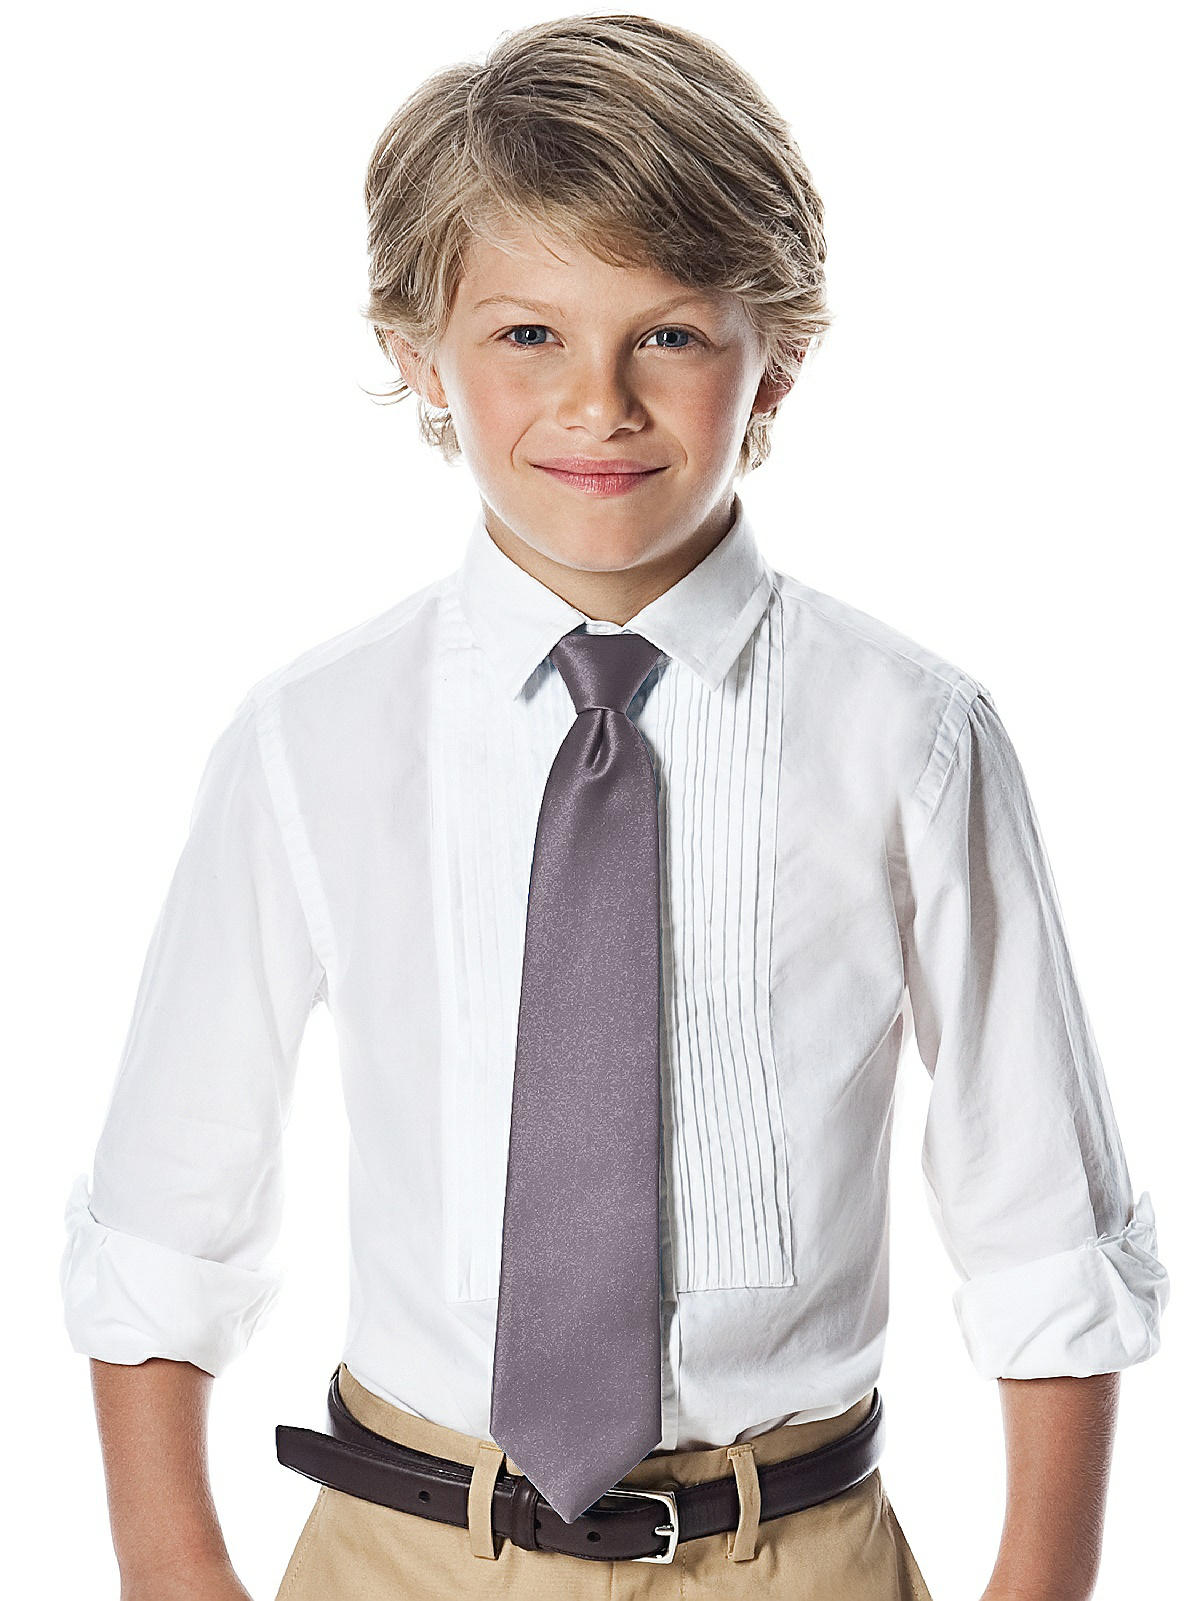 Boy With Tie